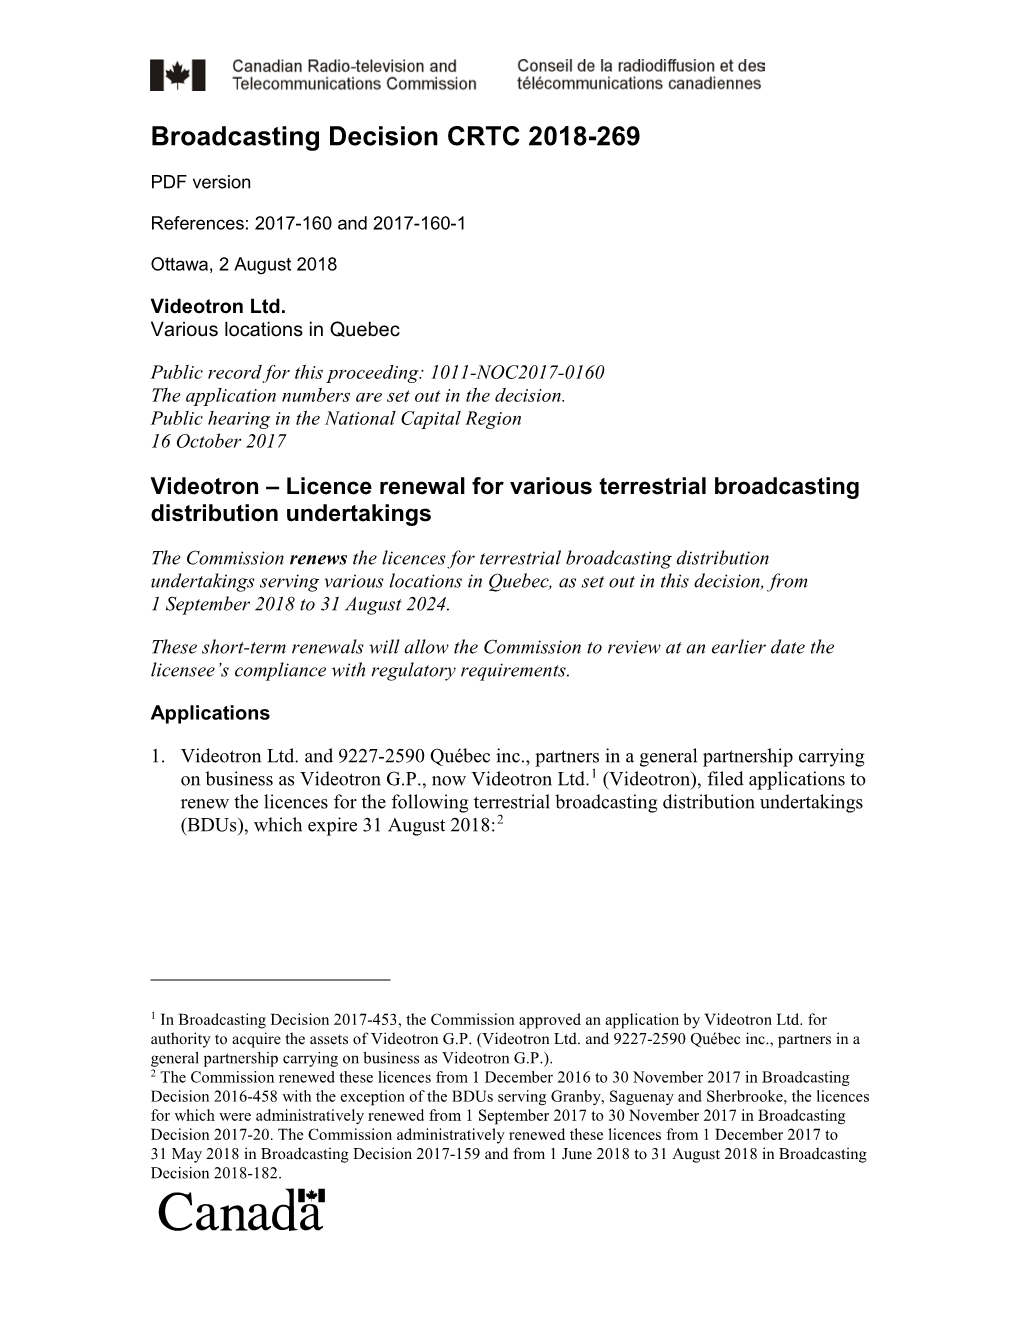 Videotron – Licence Renewal for Various Terrestrial Broadcasting Distribution Undertakings